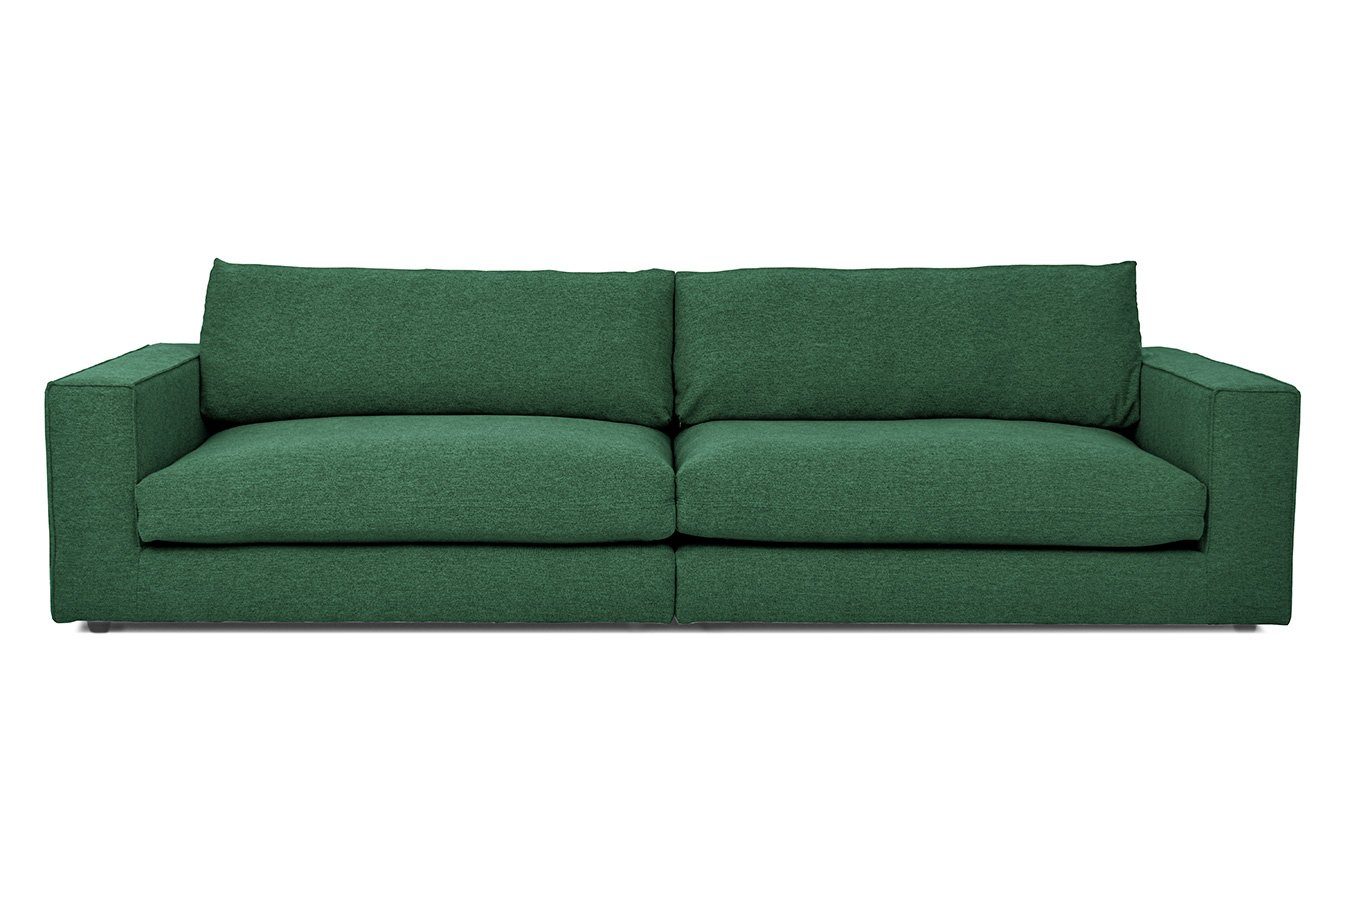 daslagerhaus Venezia 3,5-Sitzer living Stoff Big-Sofa dunkelgrün